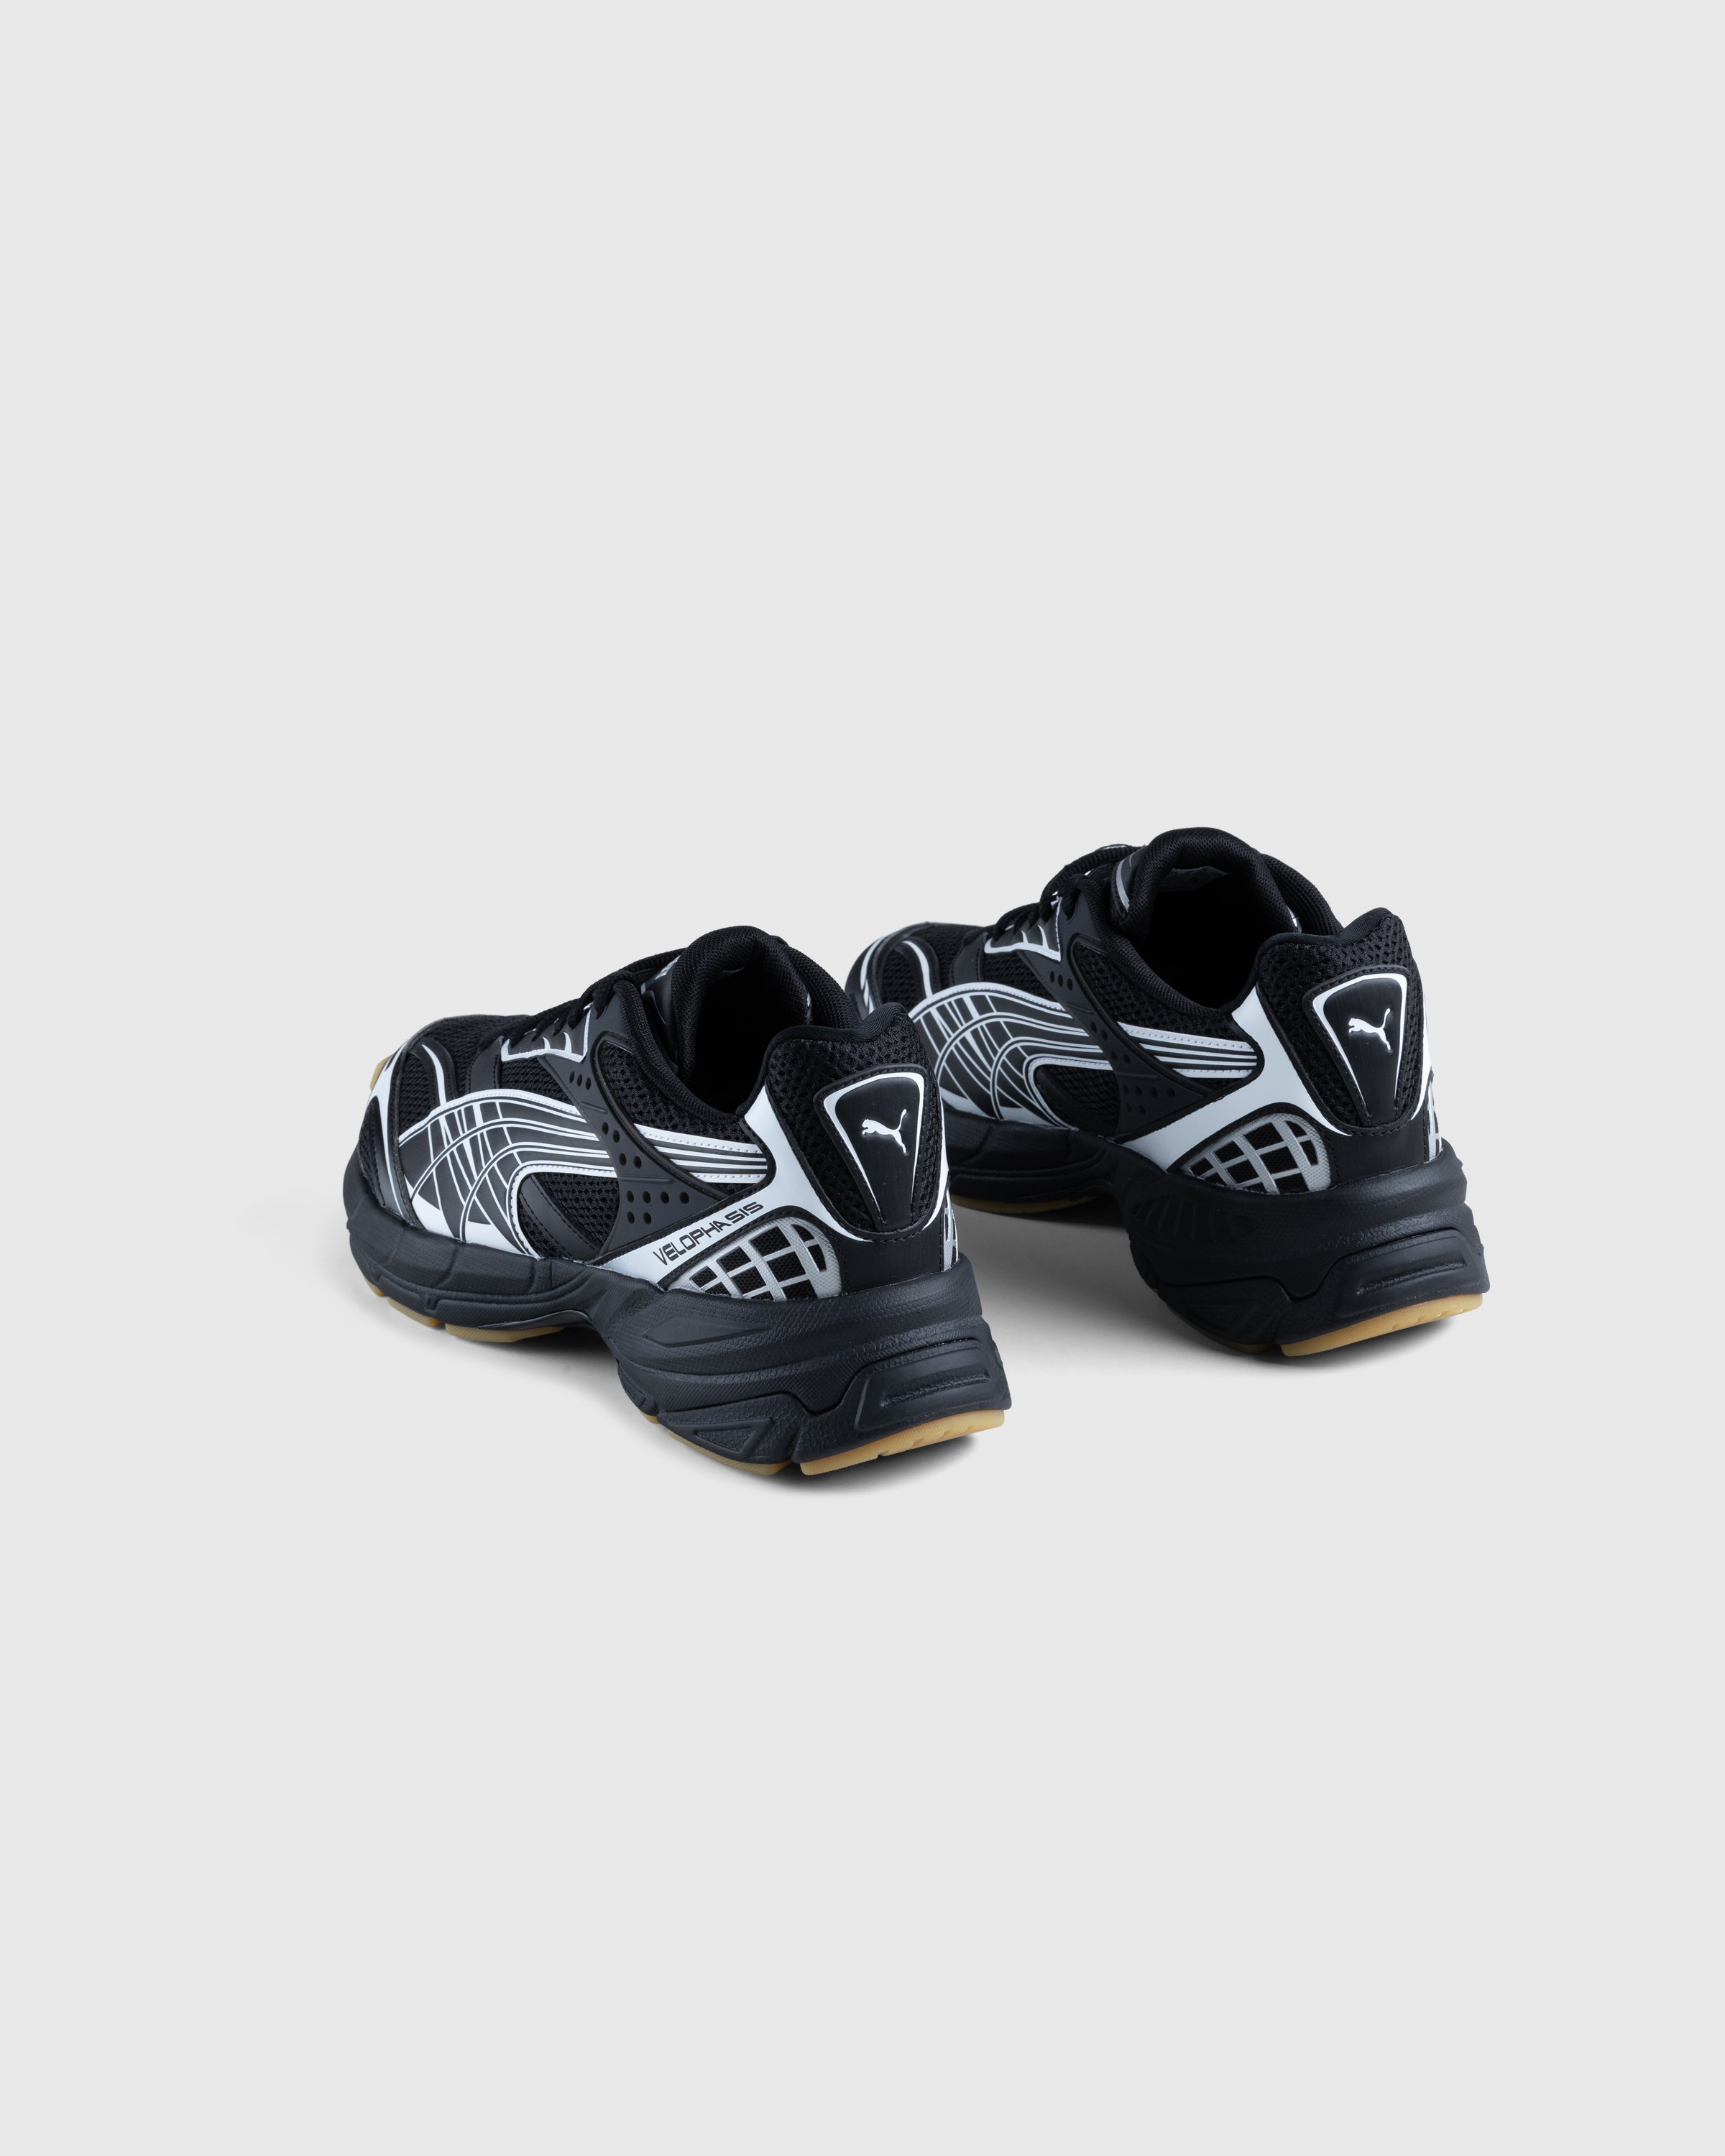 Puma - Velophasis Technisch Black - Footwear - Black - Image 4